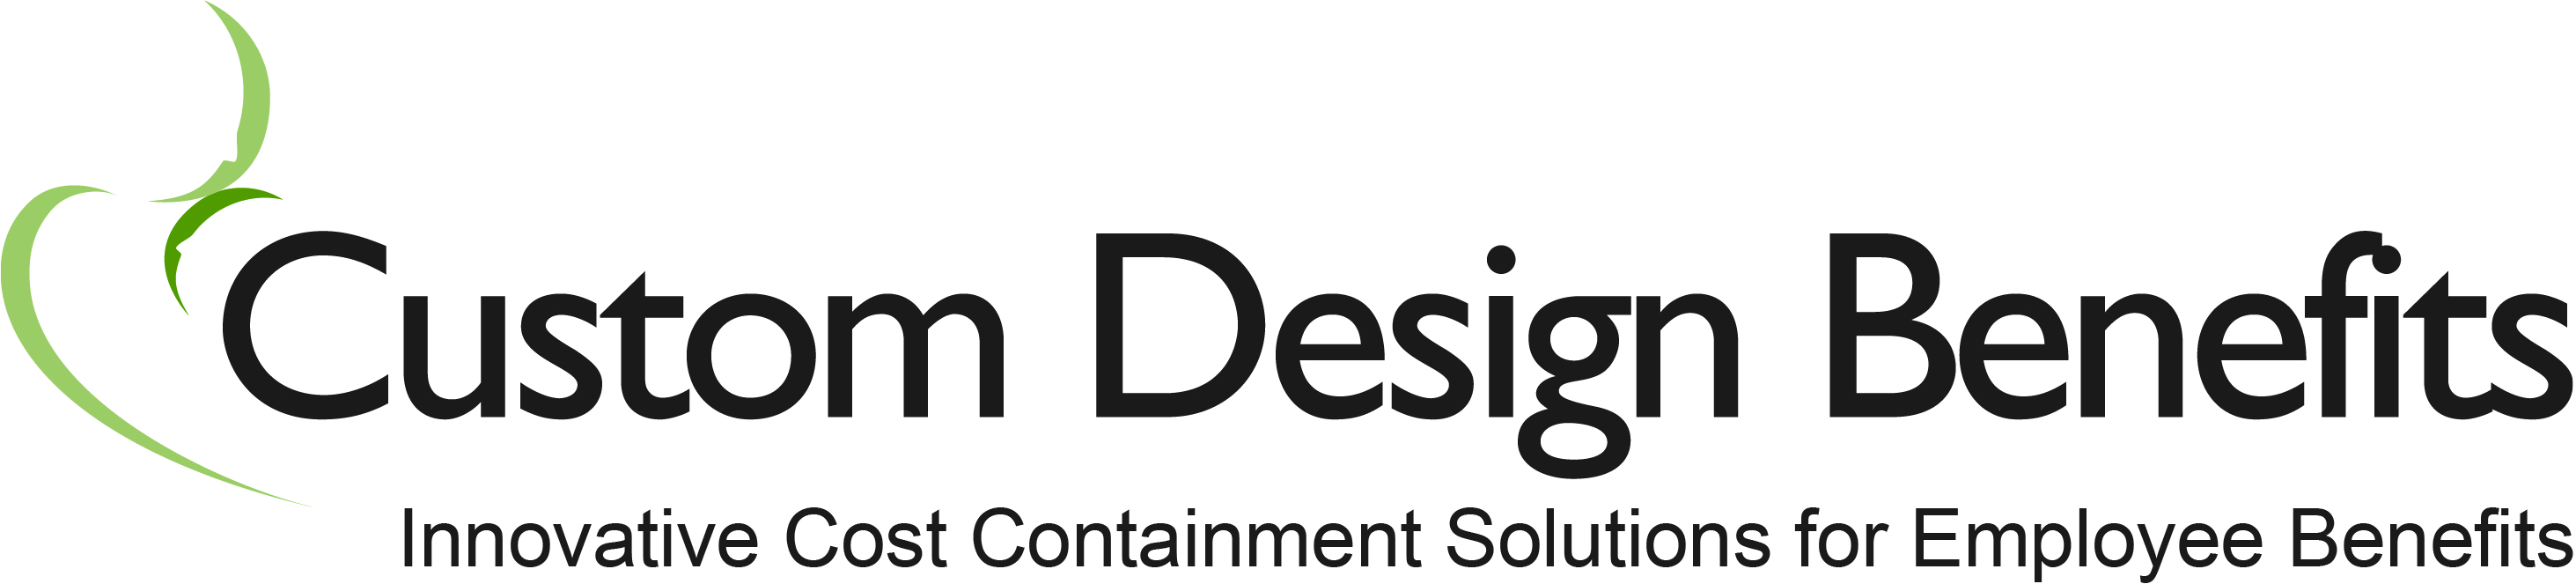 Custom Design Benefits, Inc.